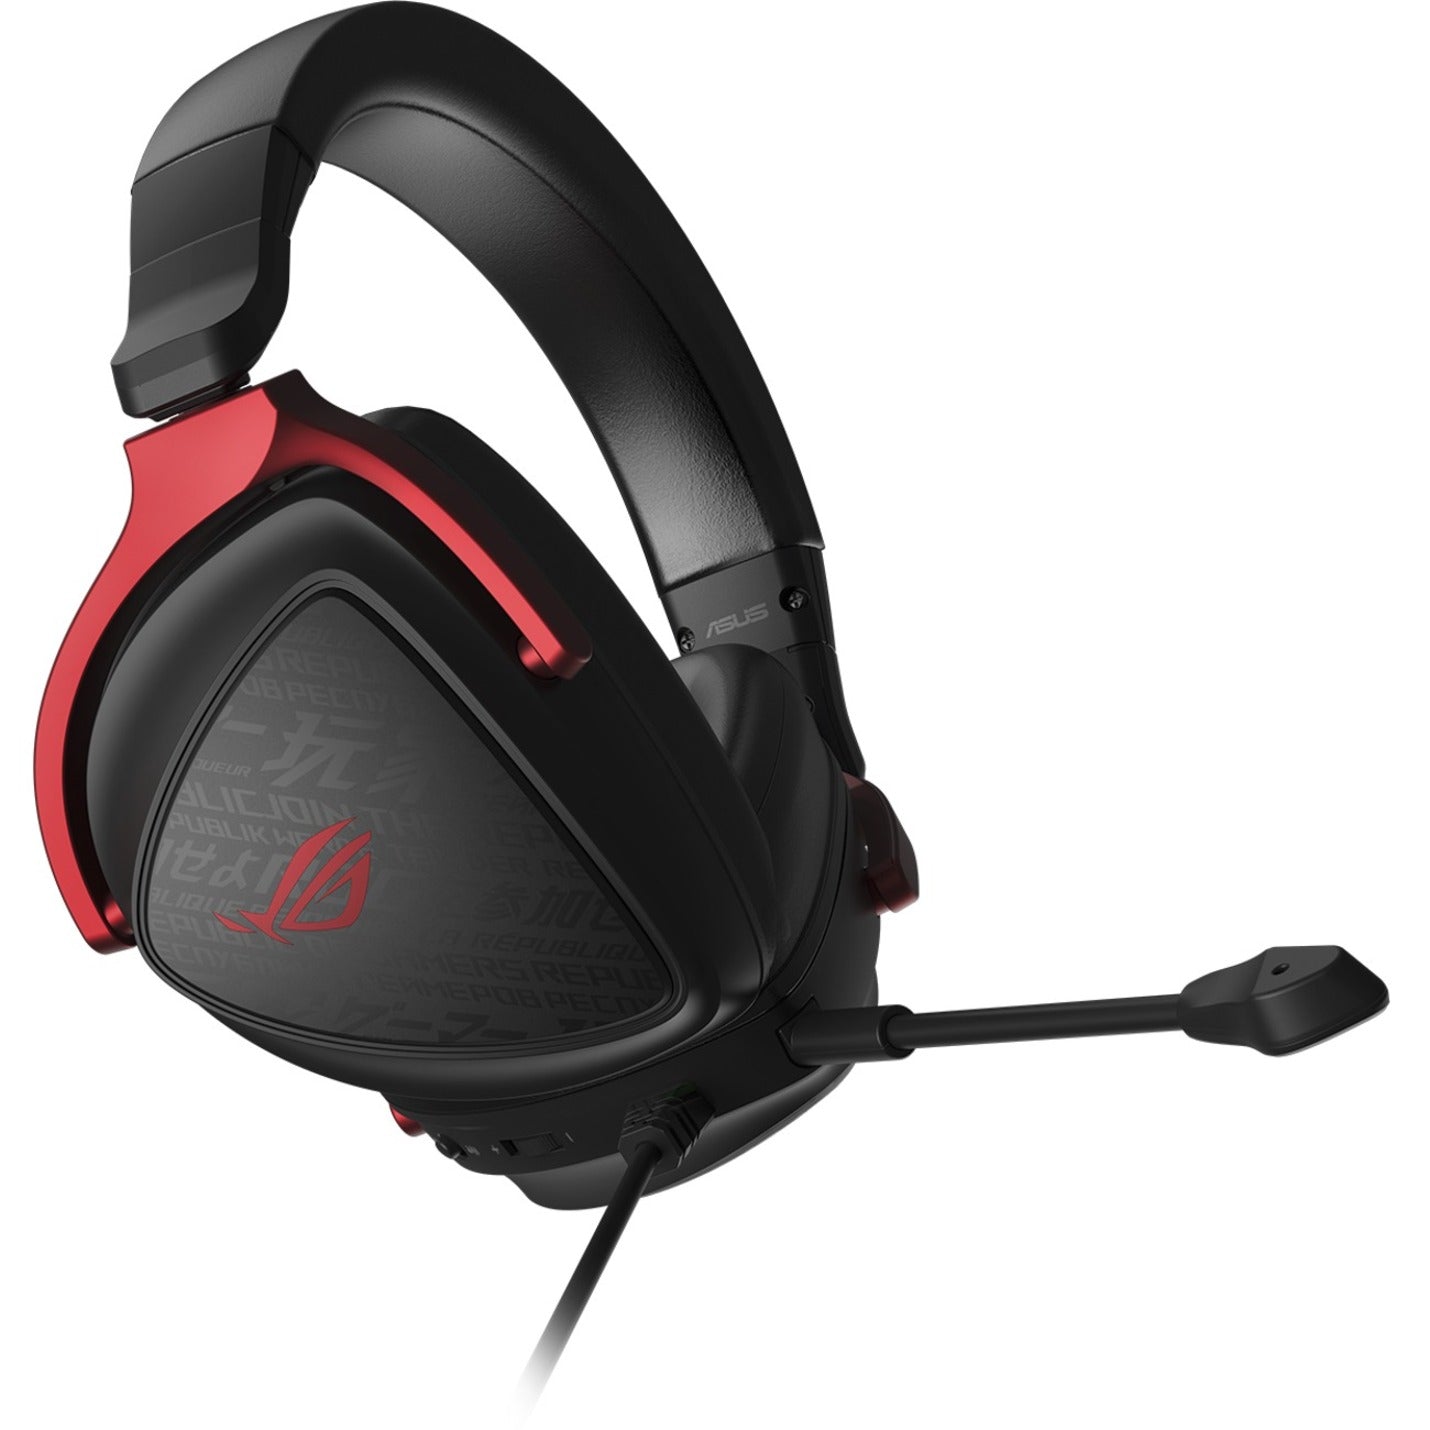 Asus ROG DELTA S CORE Gaming Headset, Lightweight Foldable Ergonomic Design, 7.1 Surround Sound